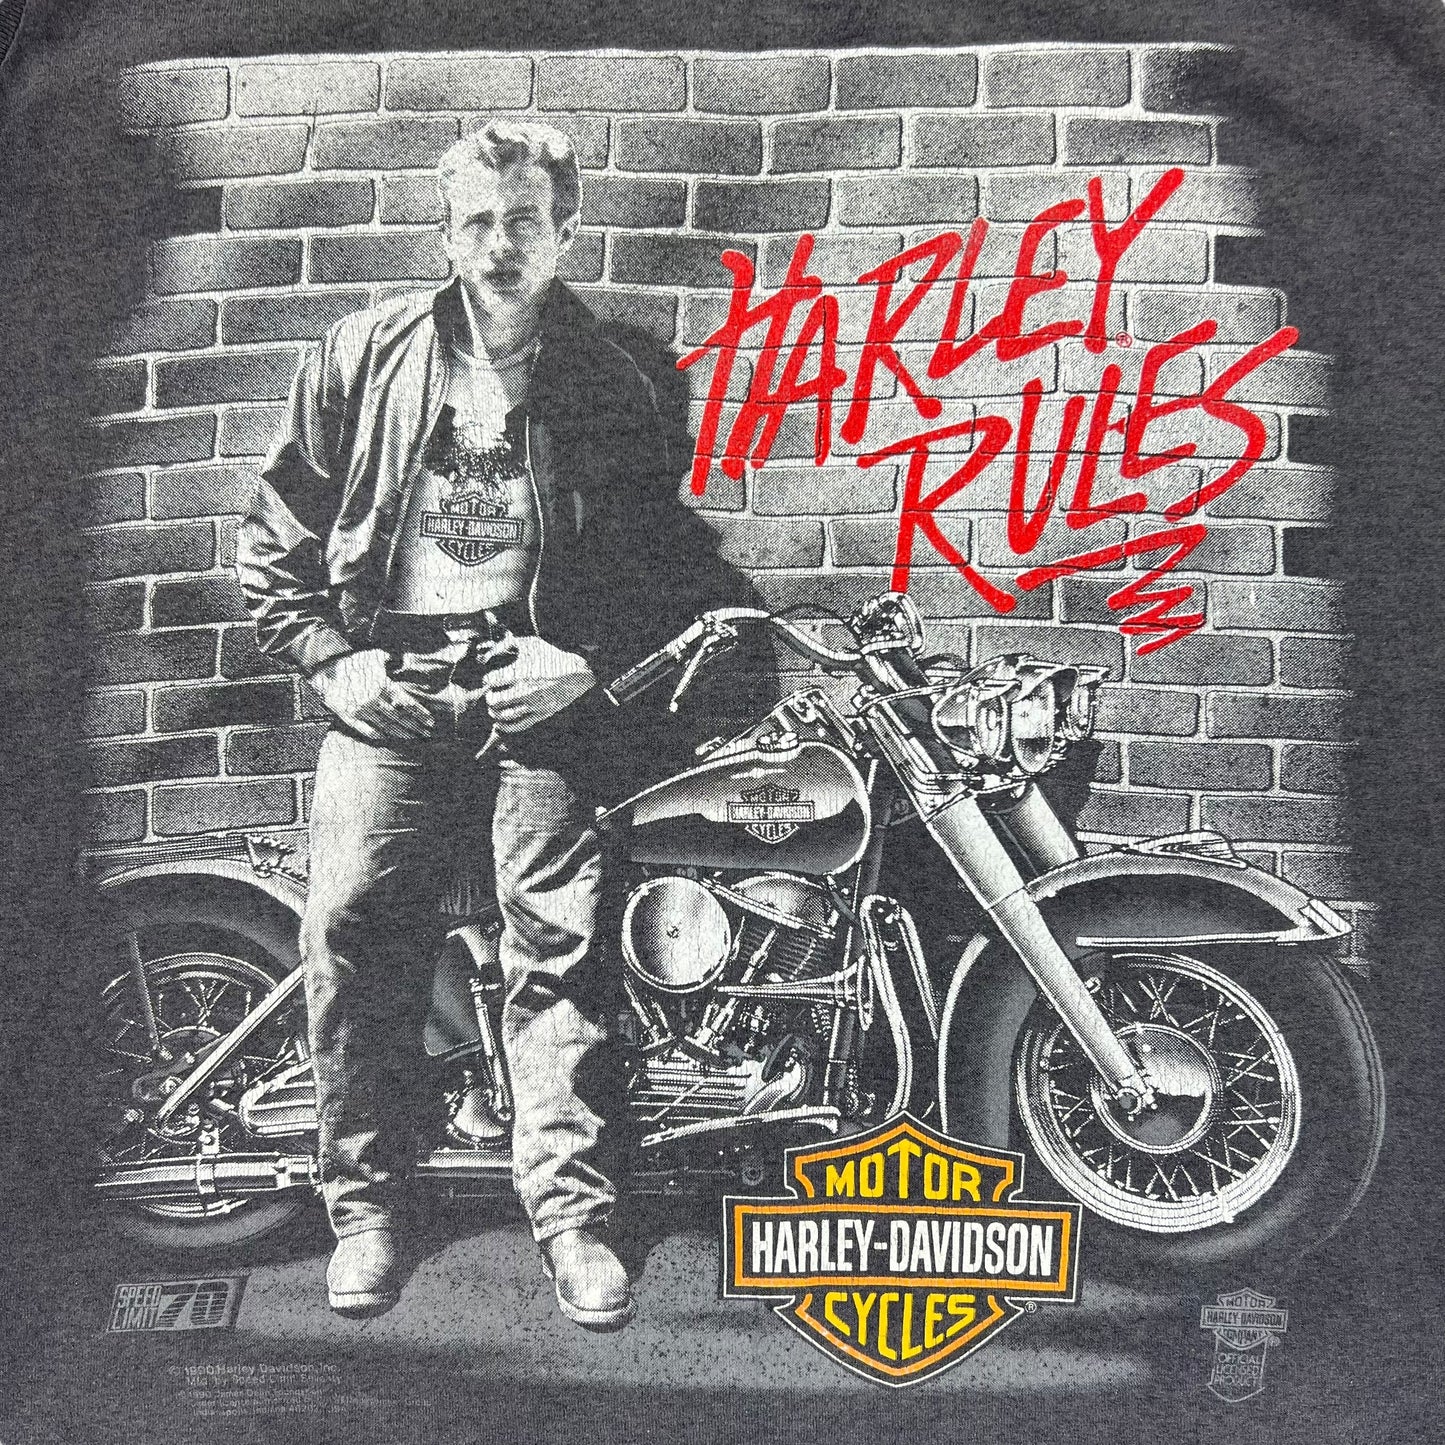 Vintage 1990 Harley Davidson Motorcycles James Dean tank top (M)